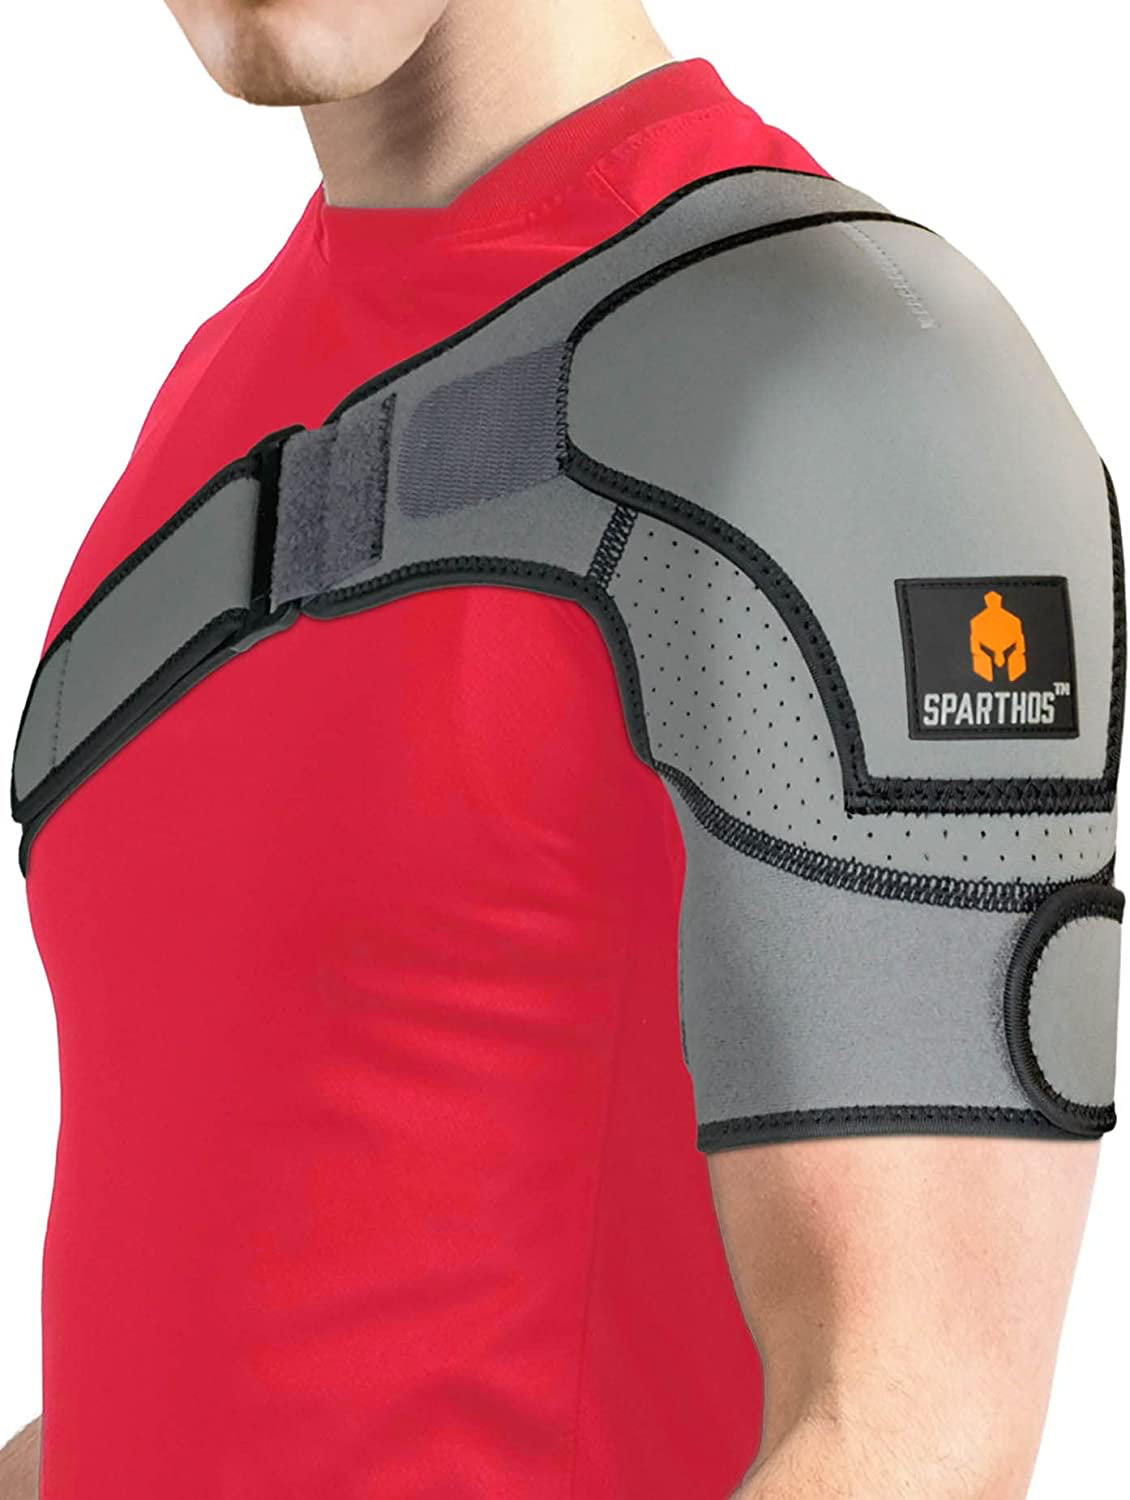 sparthos compression sleeve